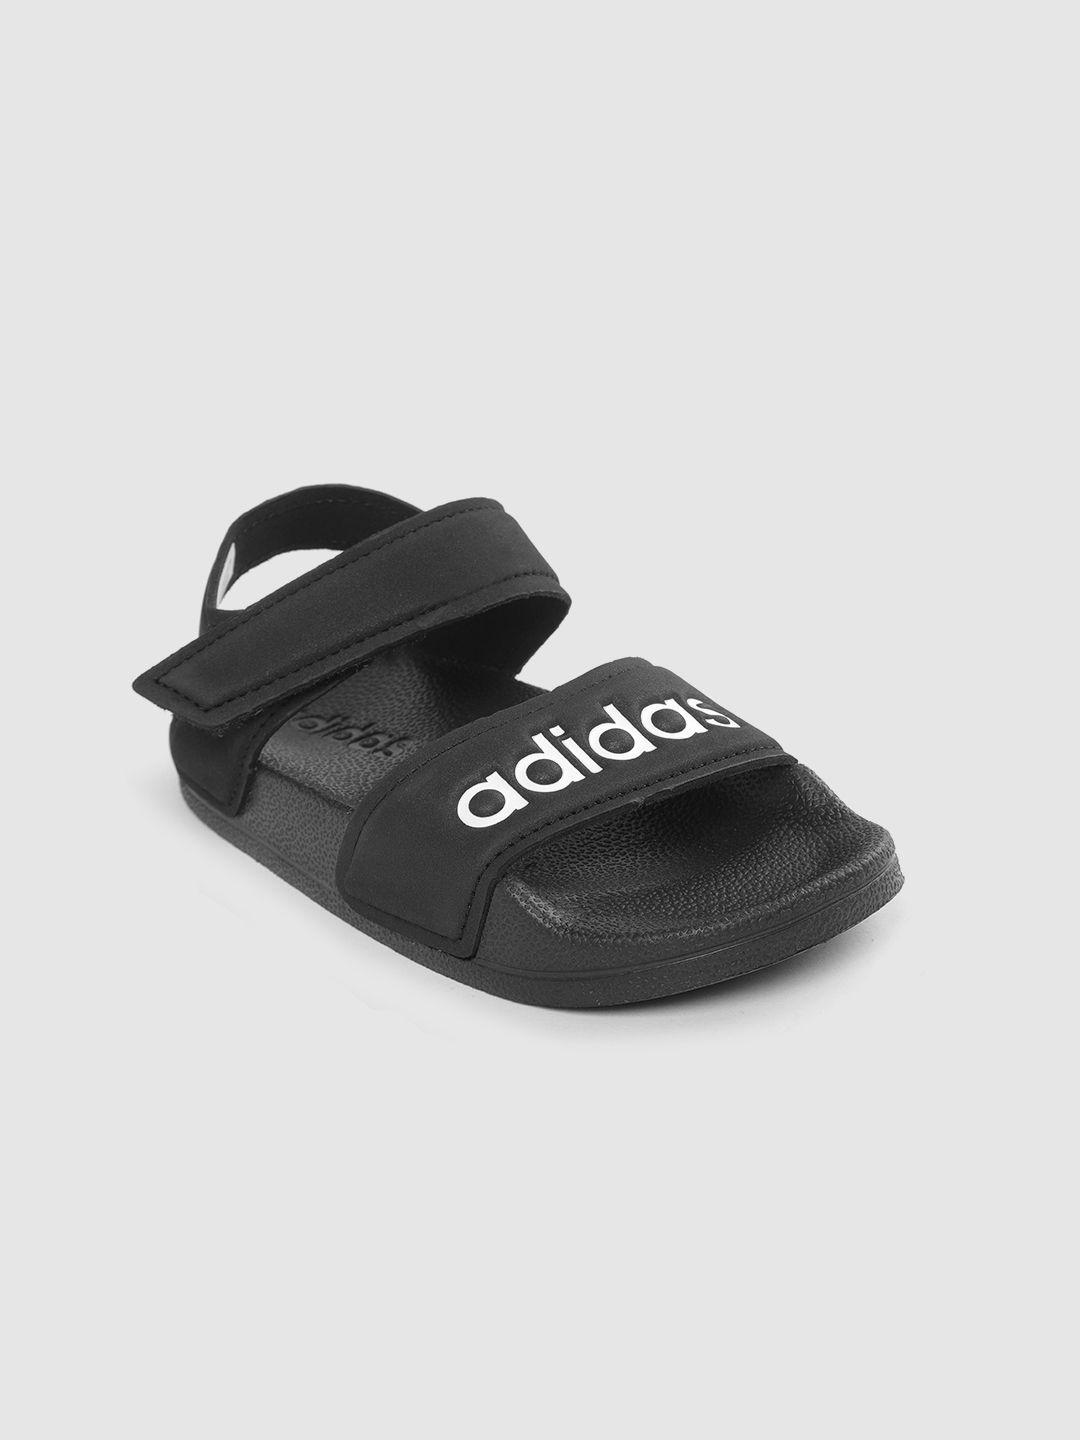 adidas boys black adilette printed sports sandals